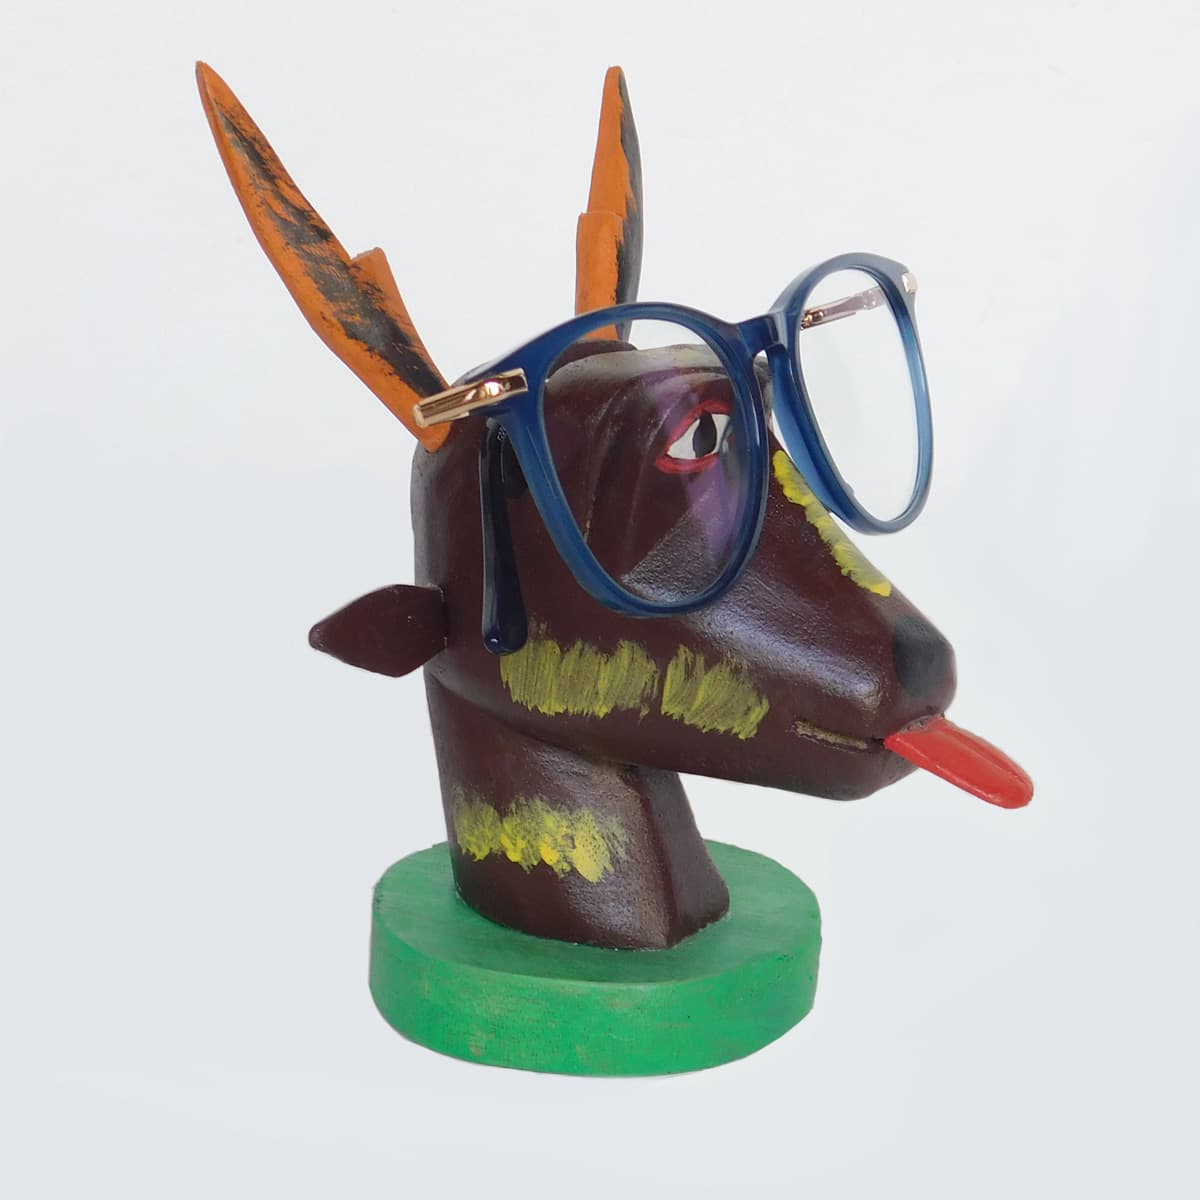 Base para colocar lentes - Figuras de animales variadas